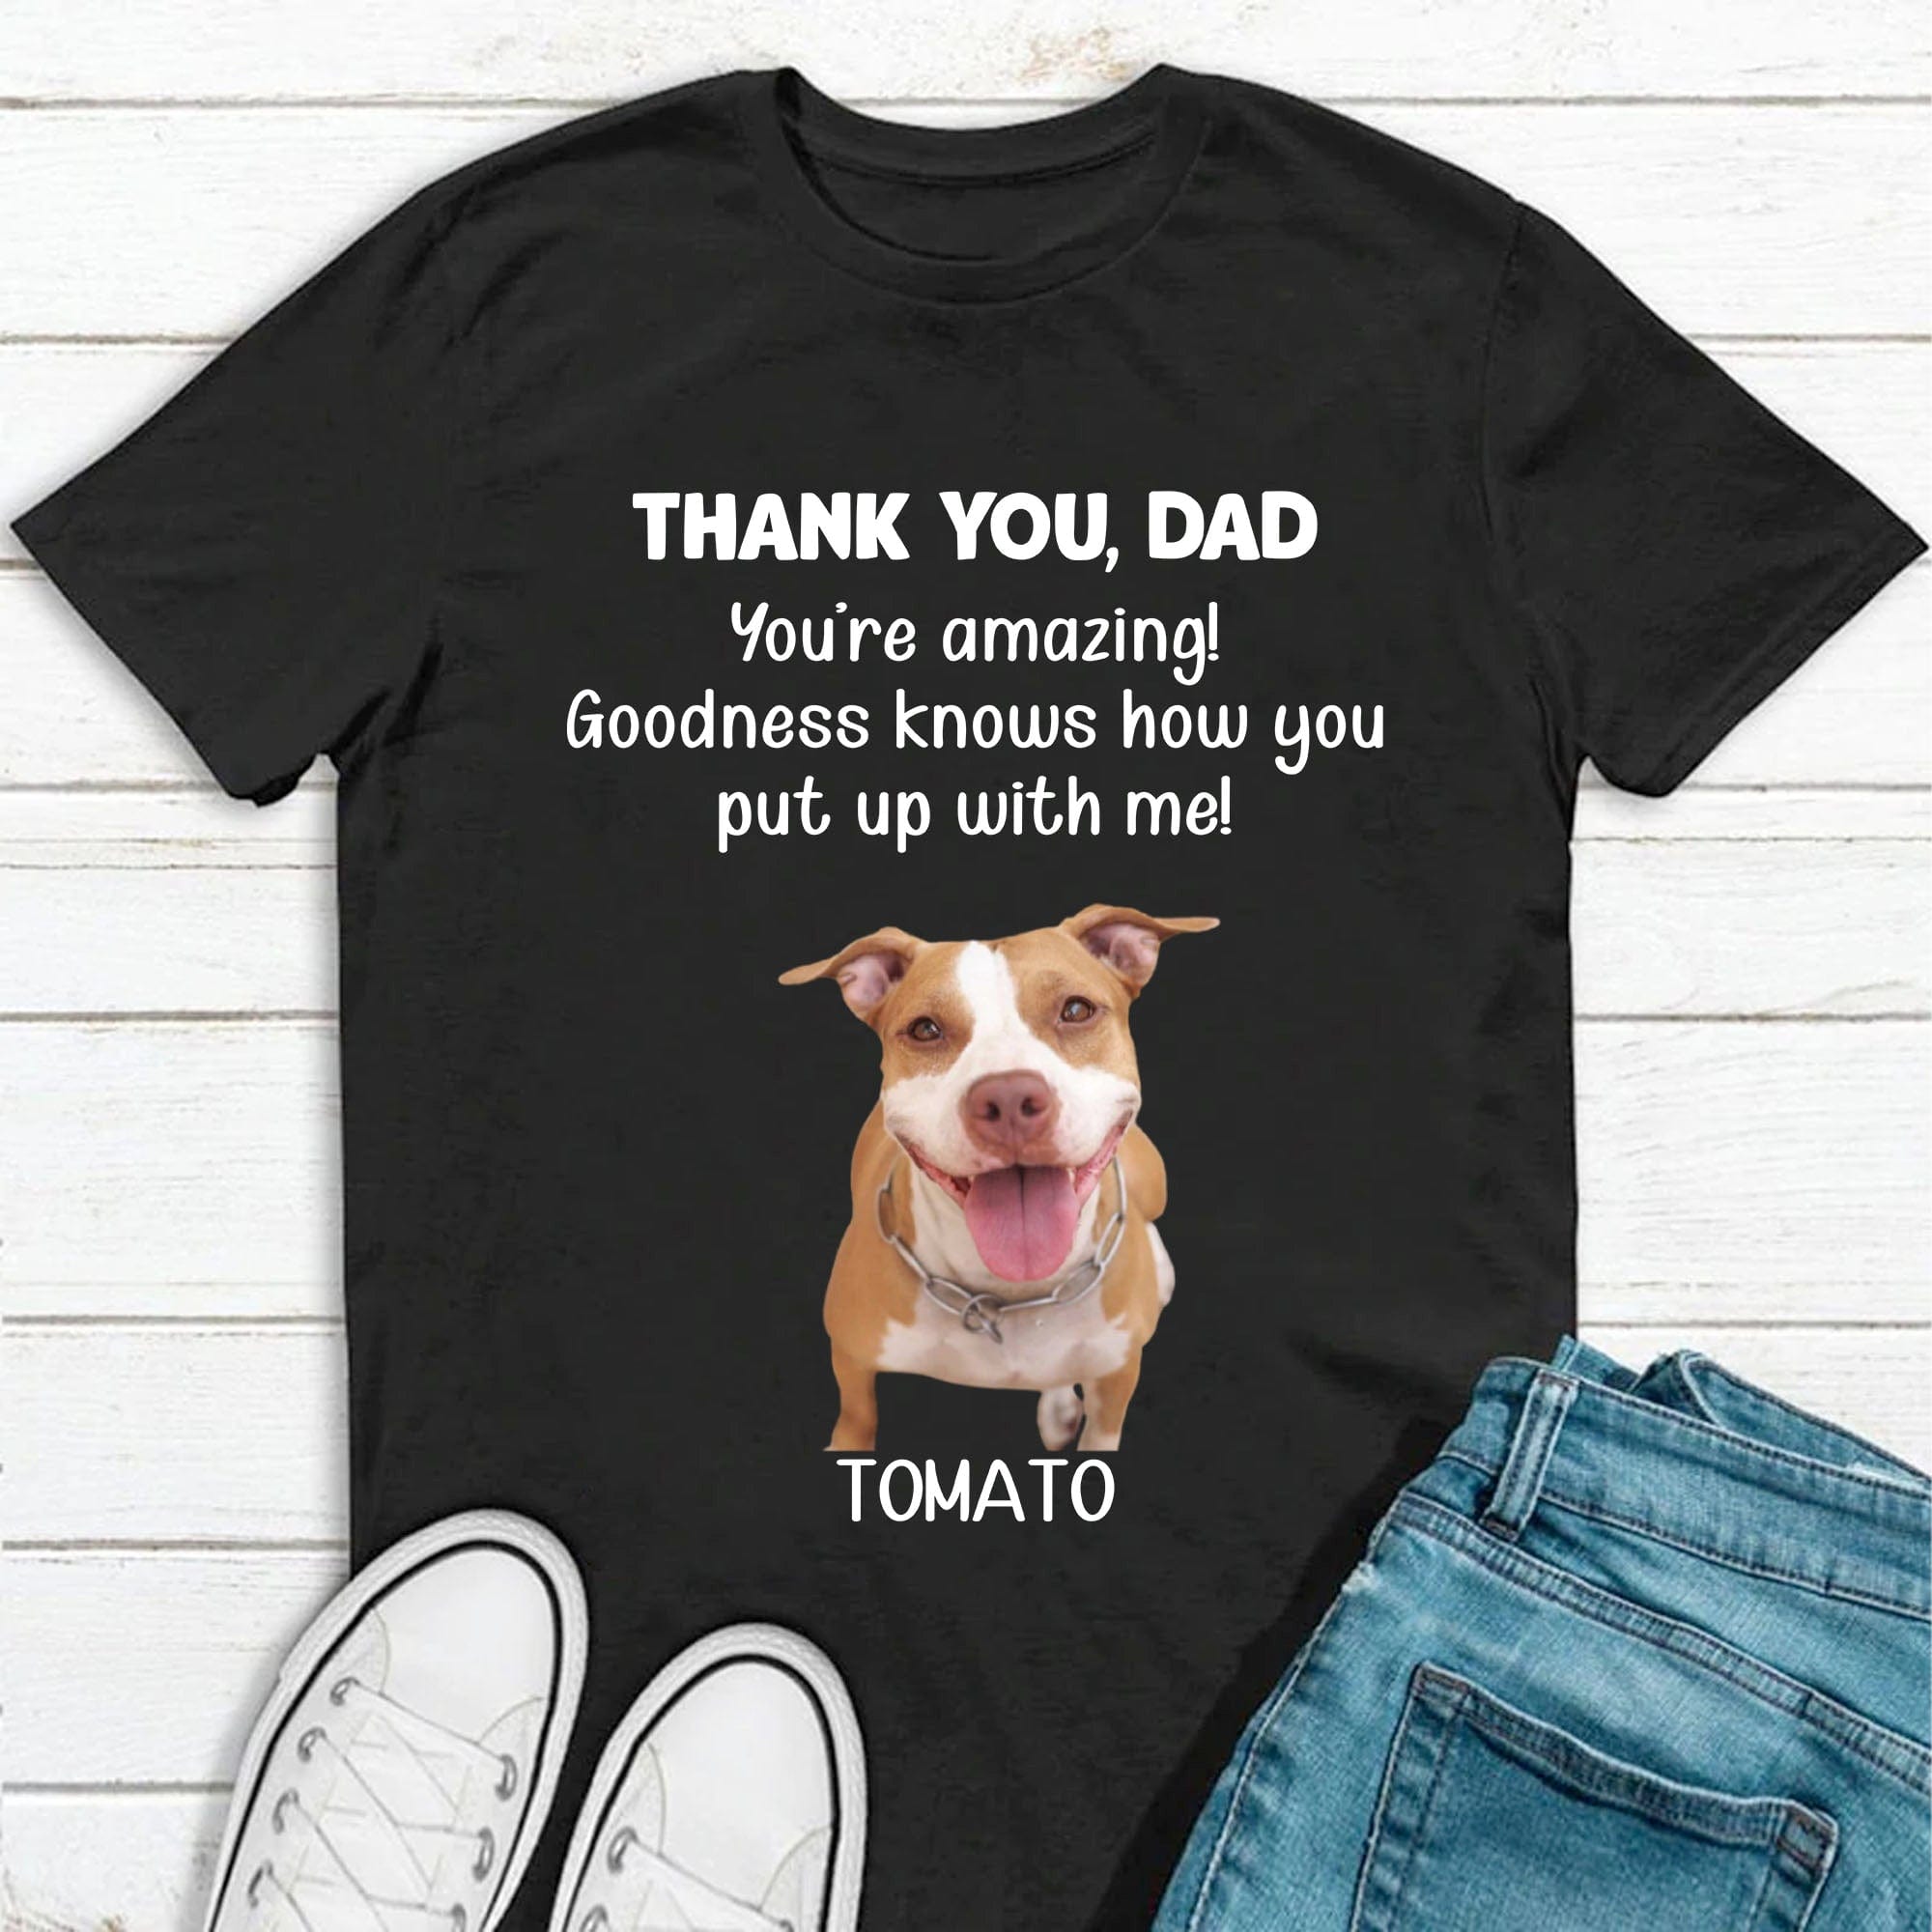 GeckoCustom Goodness Knows Personalized Dog Cat Pet Photo Shirt C284 Basic Tee / Black / S